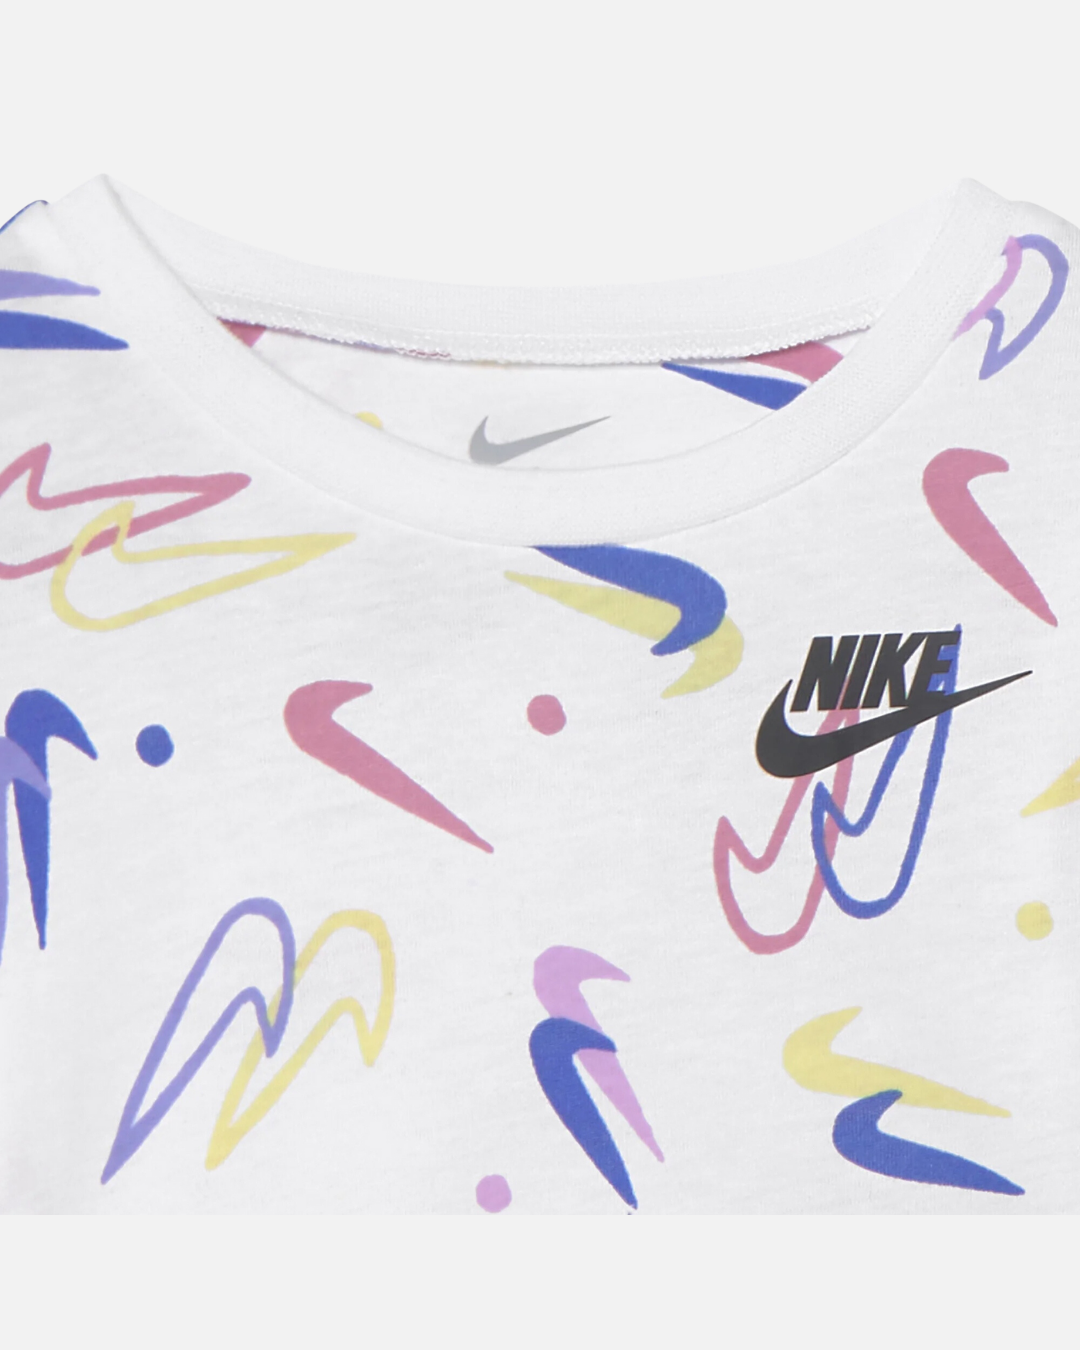 Nike Baby T-shirt/Leggings Set - White